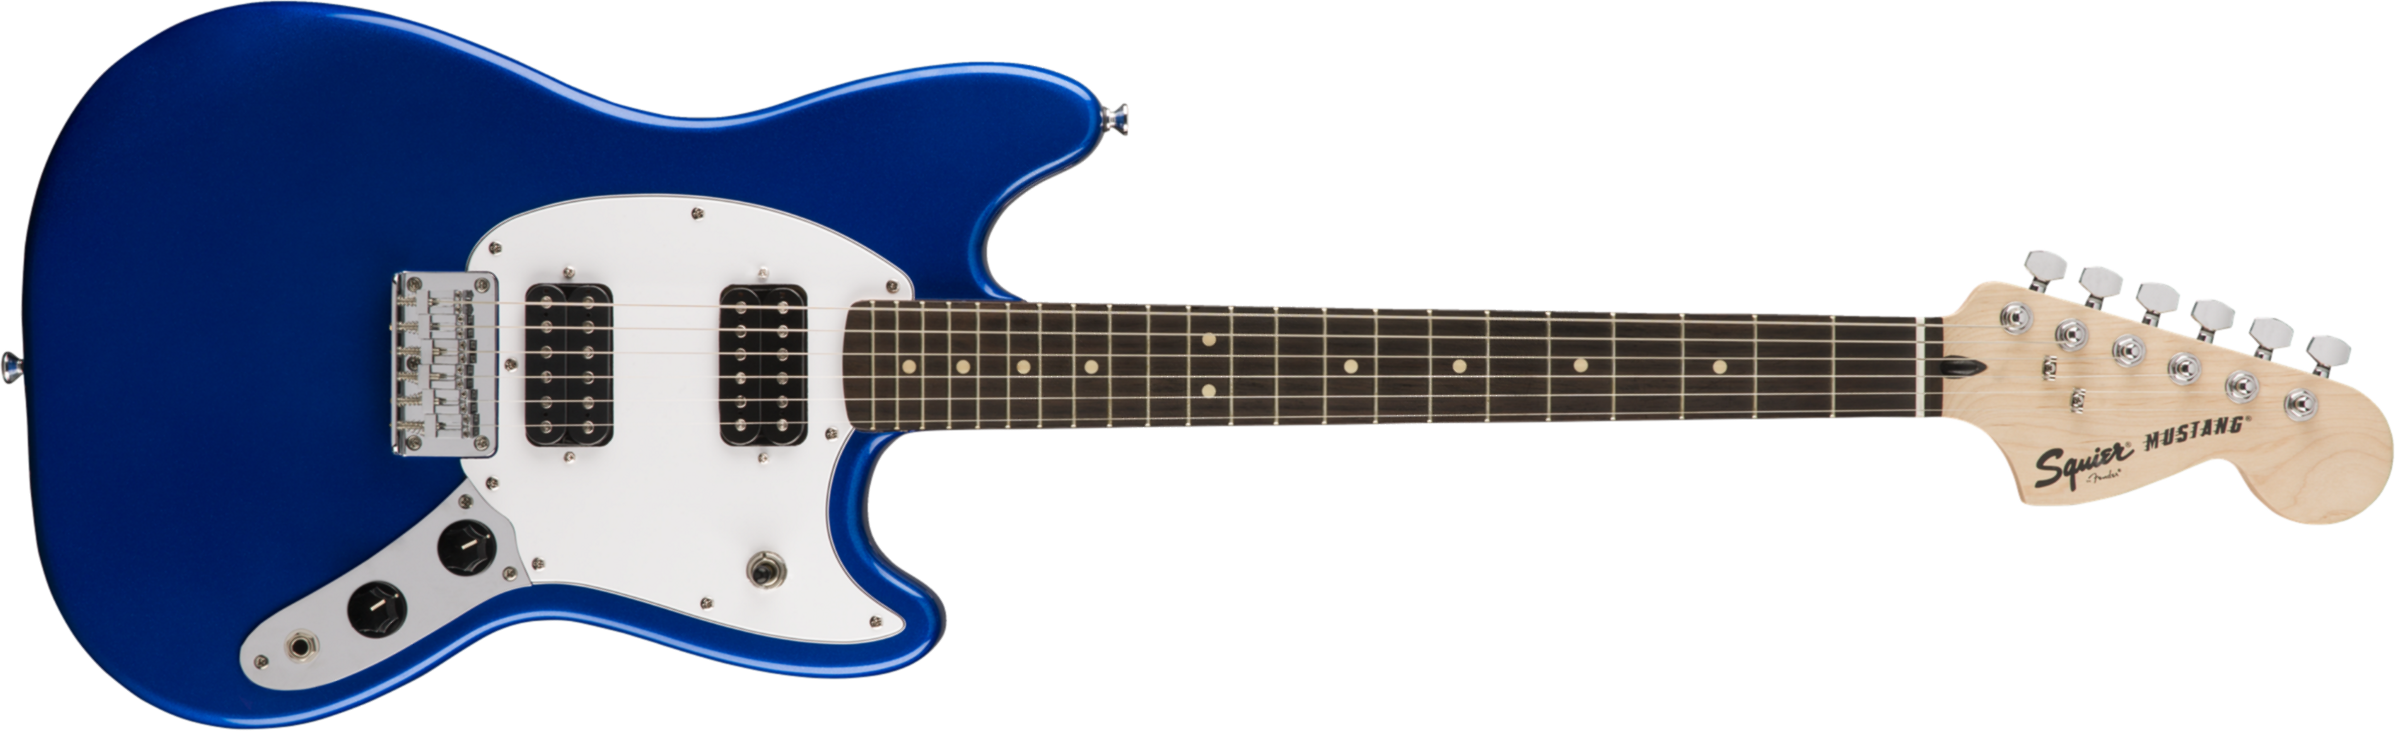 Squier Mustang Bullet Hh 2019 Ht Lau - Imperial Blue - Retro-rock elektrische gitaar - Main picture